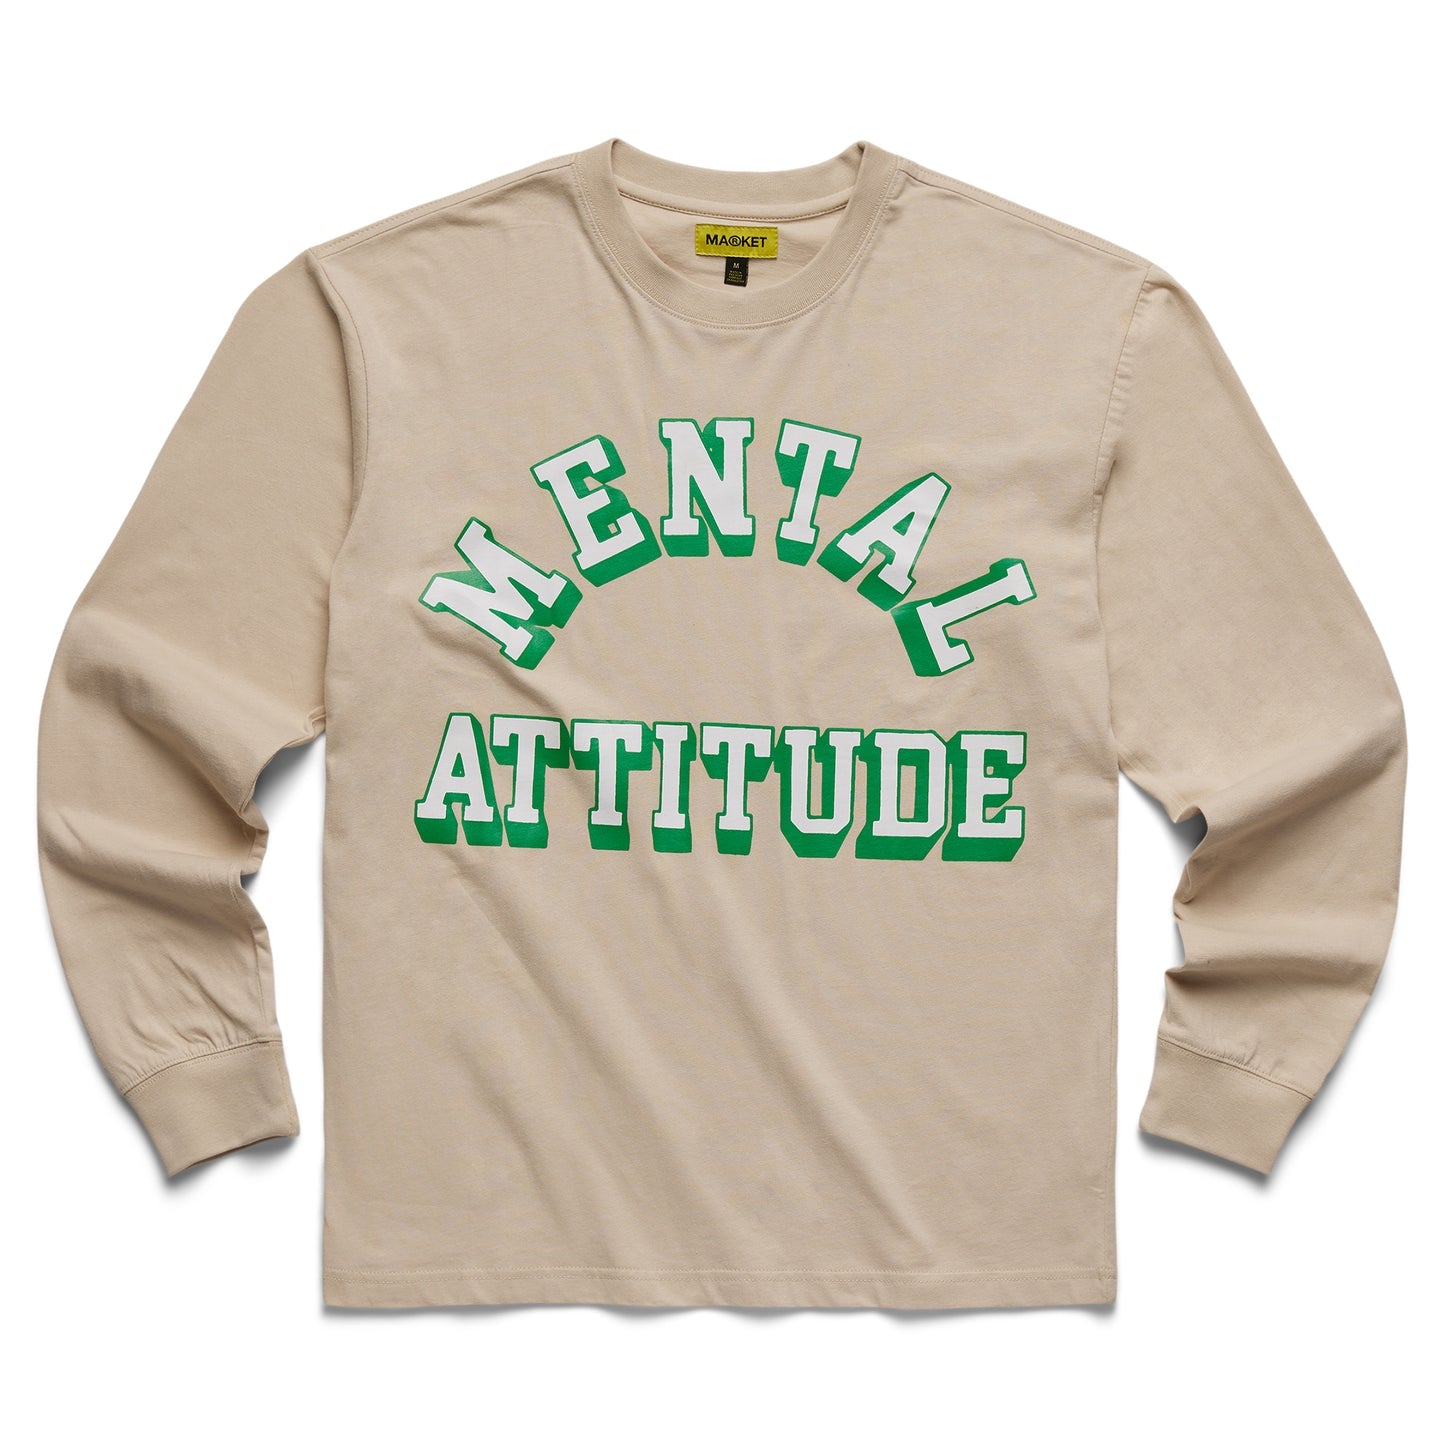 Market Mental Attitude LS T-Shirt - Khaki